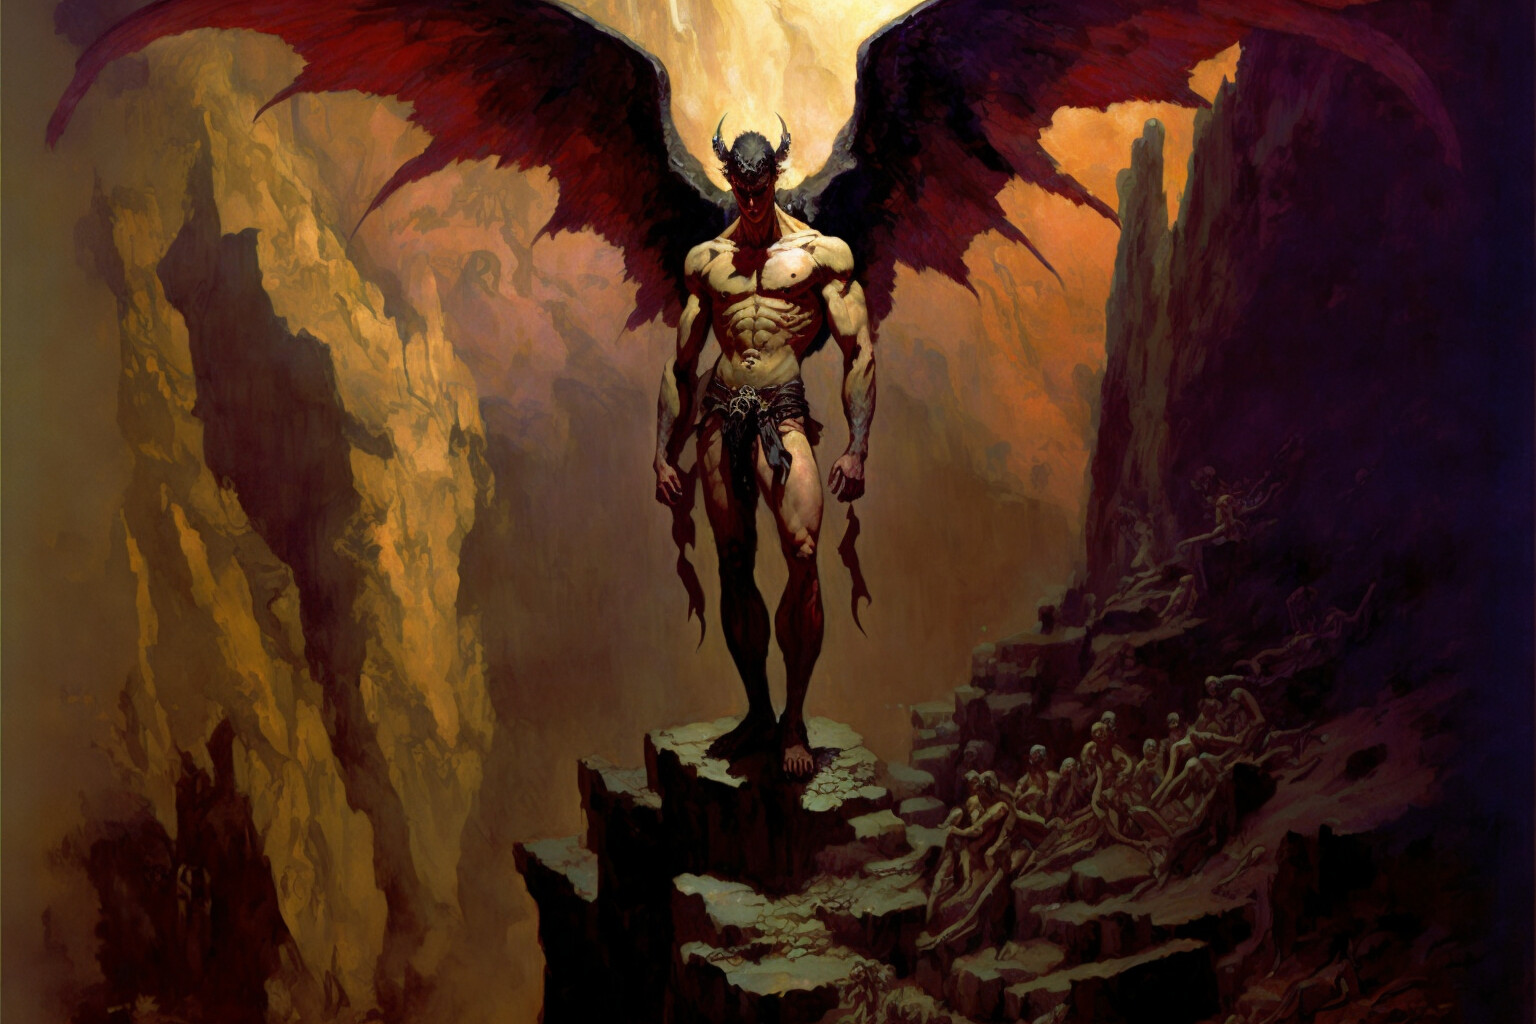 Edward Denton, [Ai] ART IS DEAD: LONG LIVE ART: ANGER – 02 series, Full body epic scene satan standing on cliff looking down, Midjourney artwork, 2023.